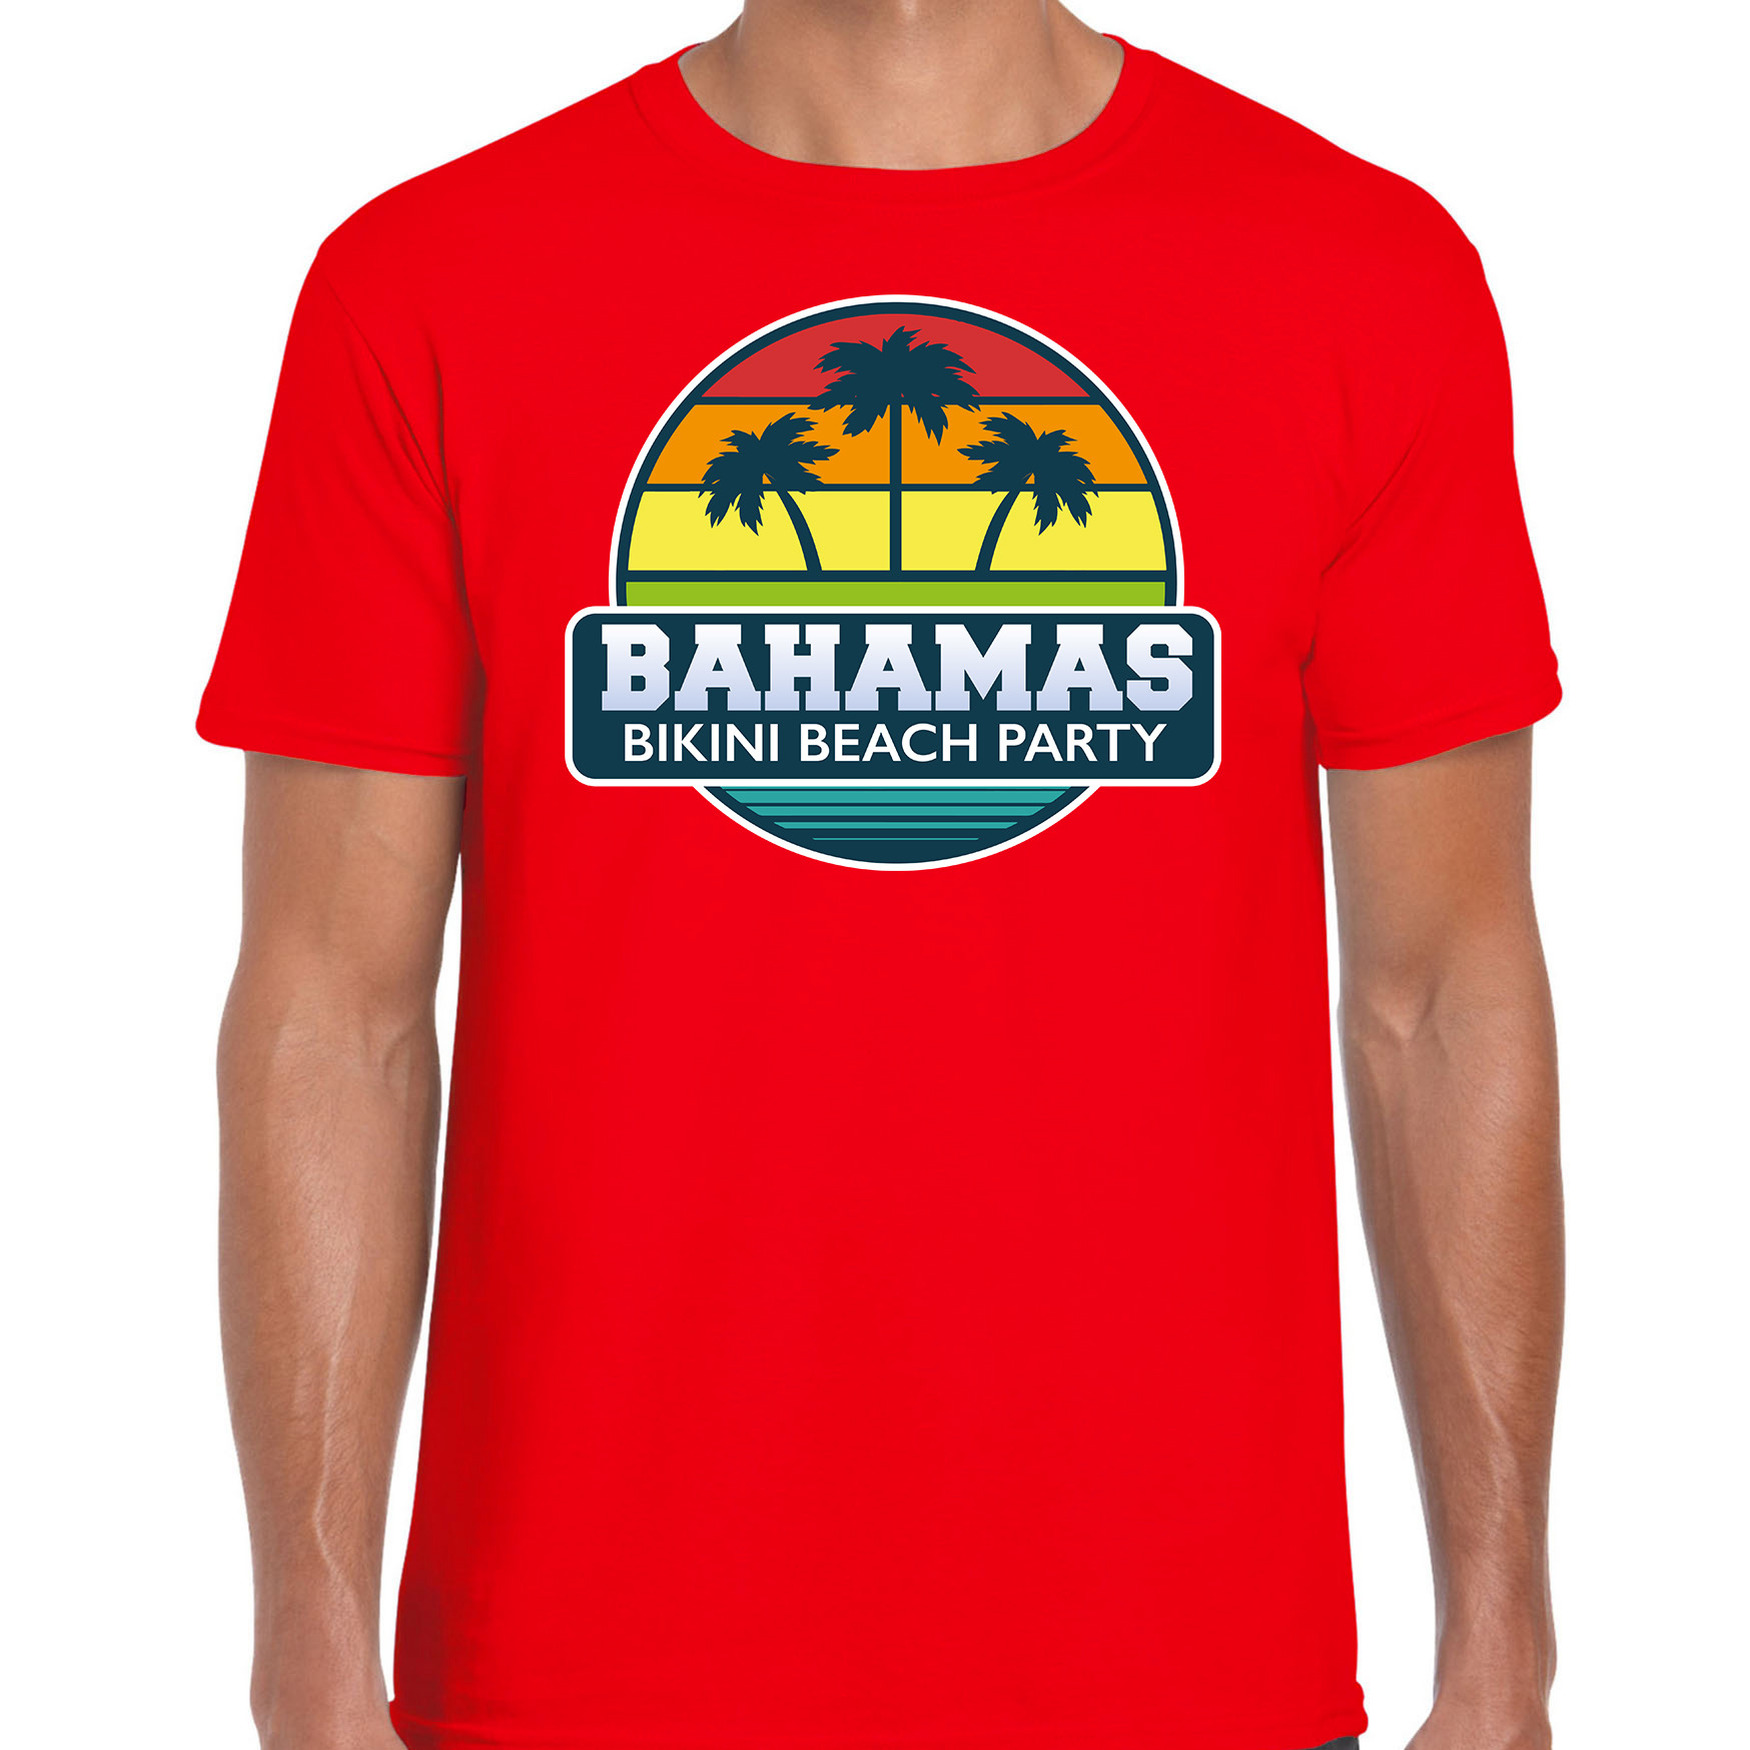 Bahamas zomer t-shirt - shirt Bahamas bikini beach party rood voor heren